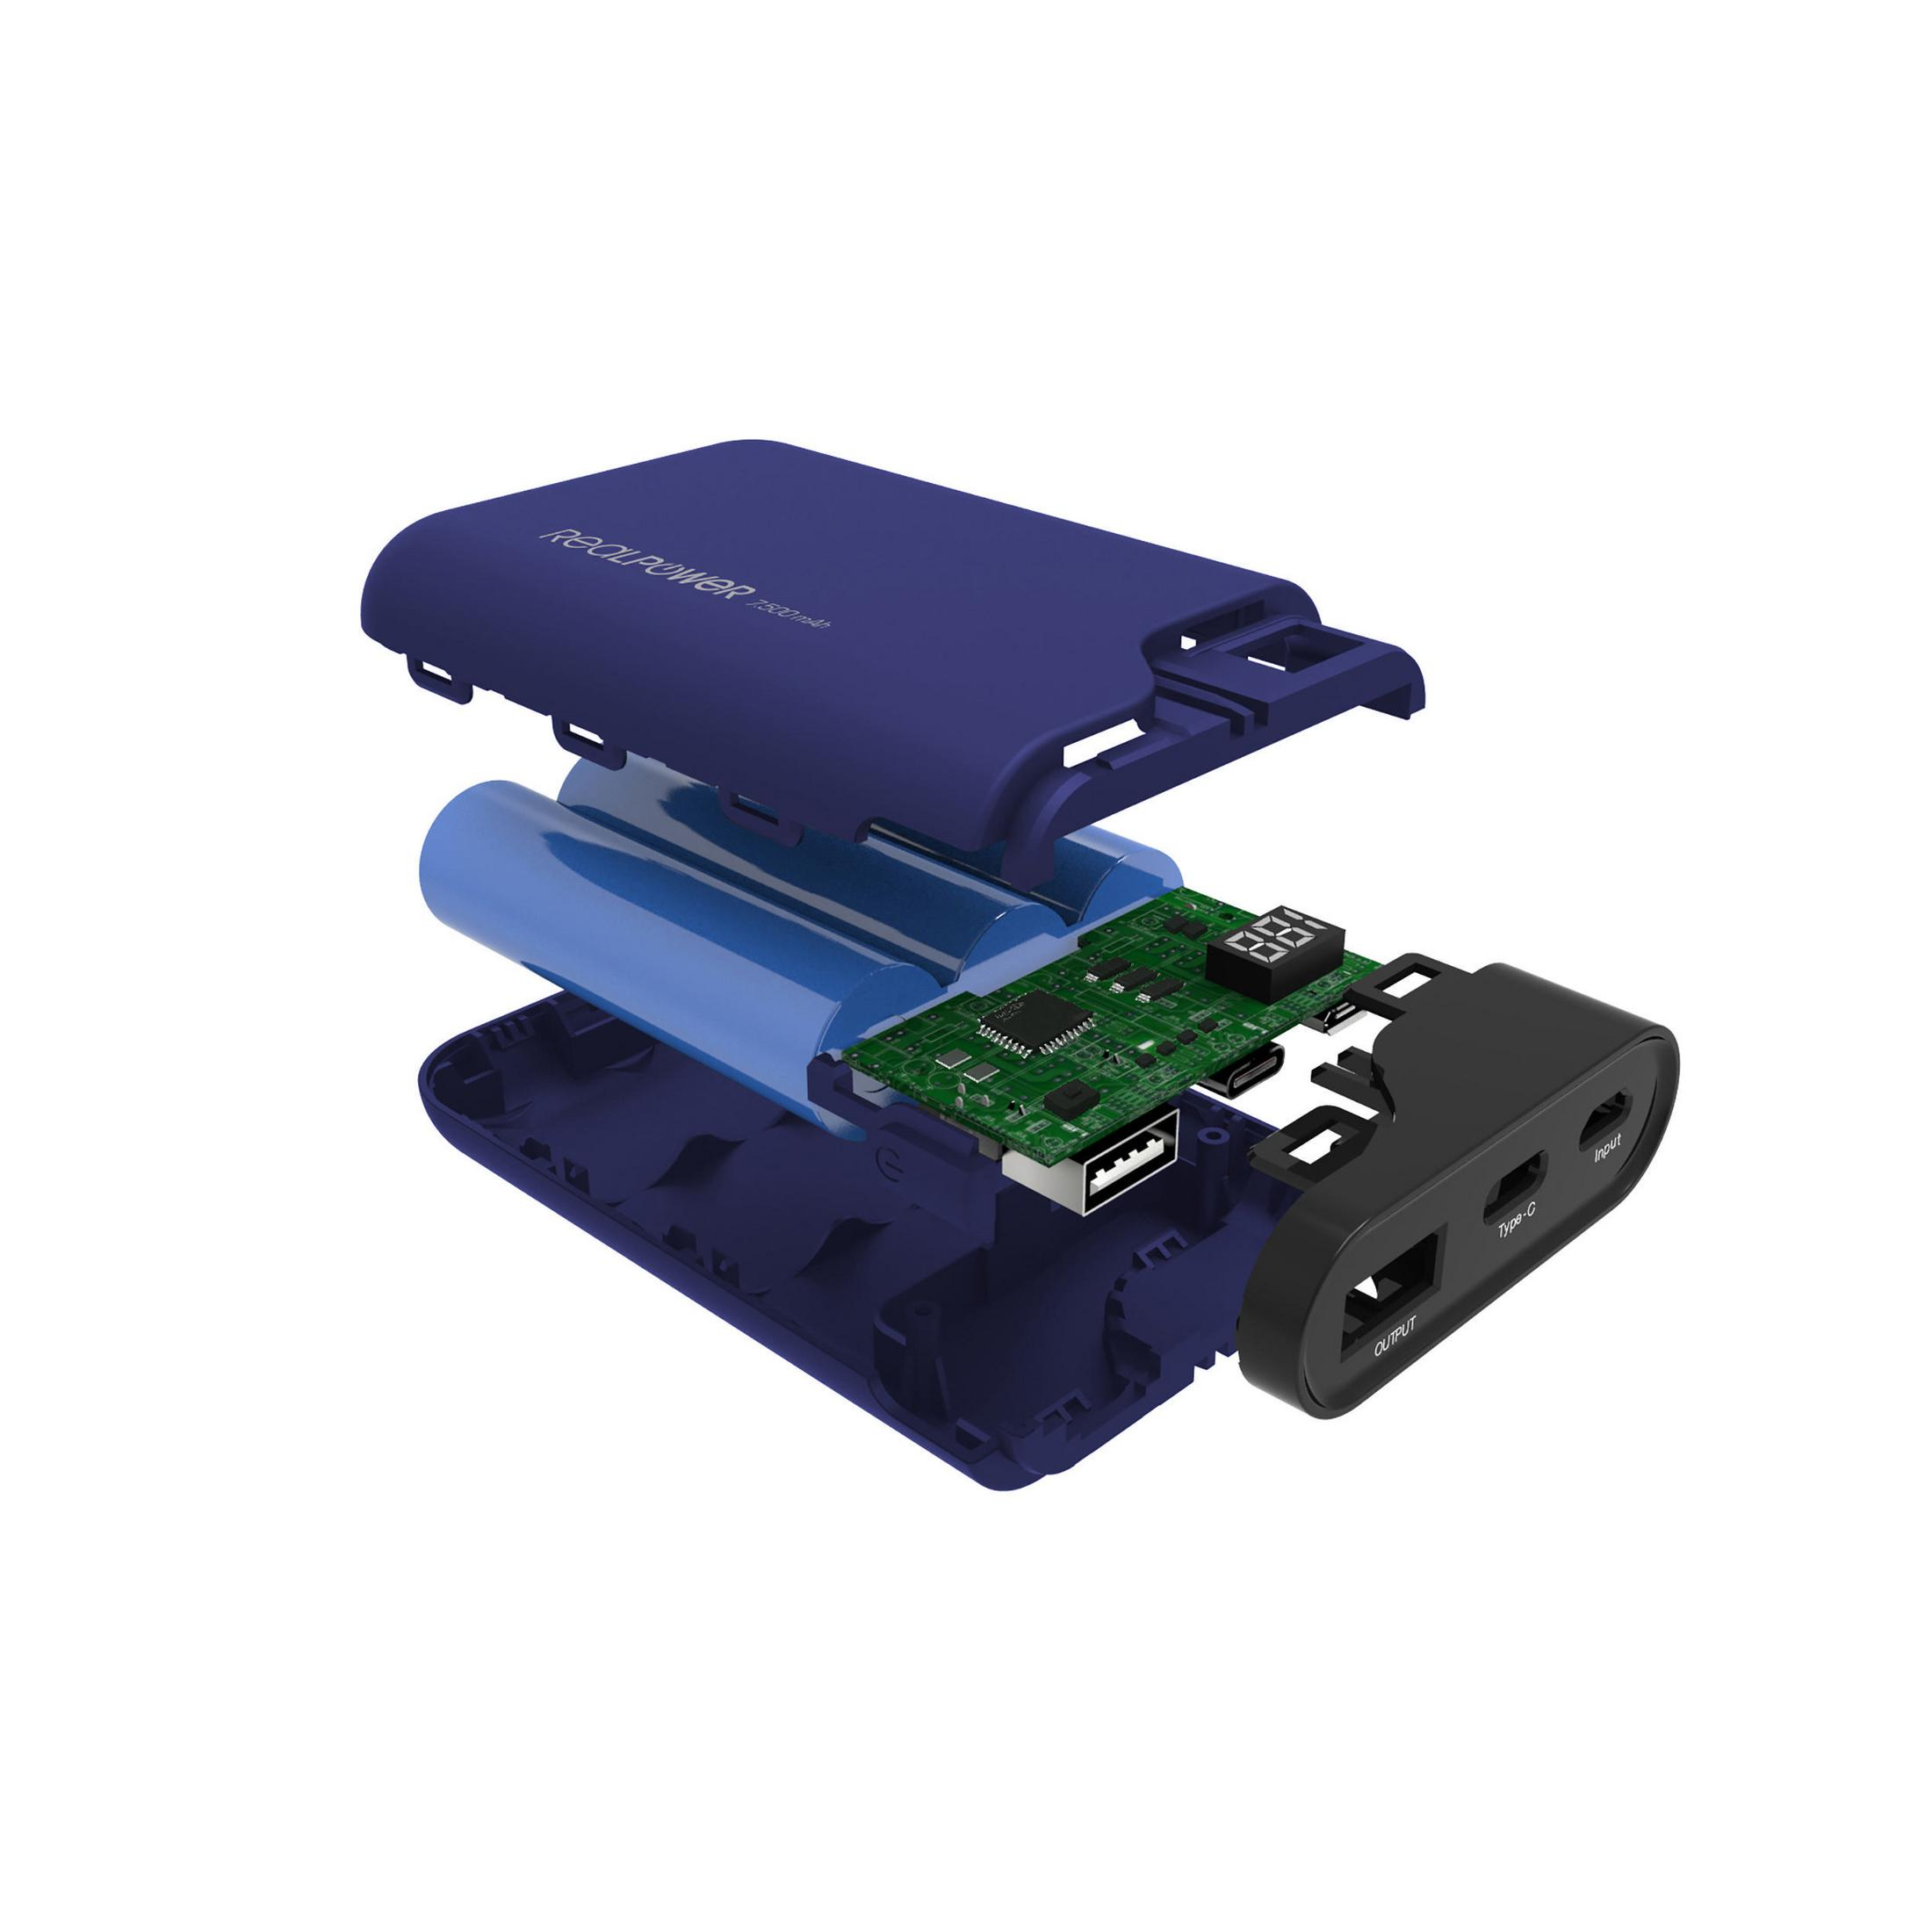 REALPOWER 333642 PB-7500C LADEPORTS Powerbank 2X mAh USB BLUE Navy + 7500 NAVY Blue